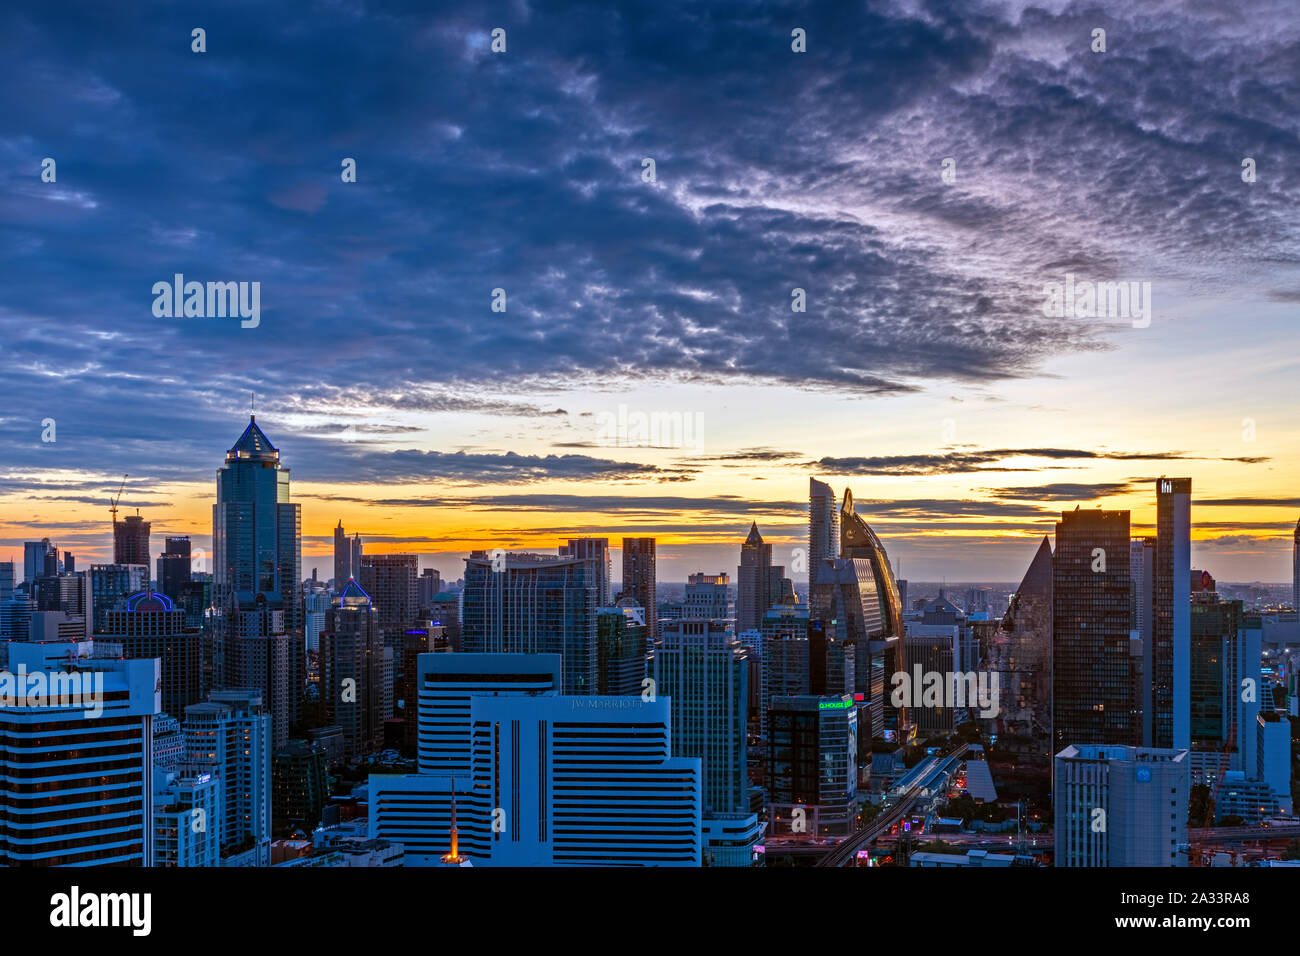 Bangkok buildings and skyline landscape at sunset, Thailand Stock Photo